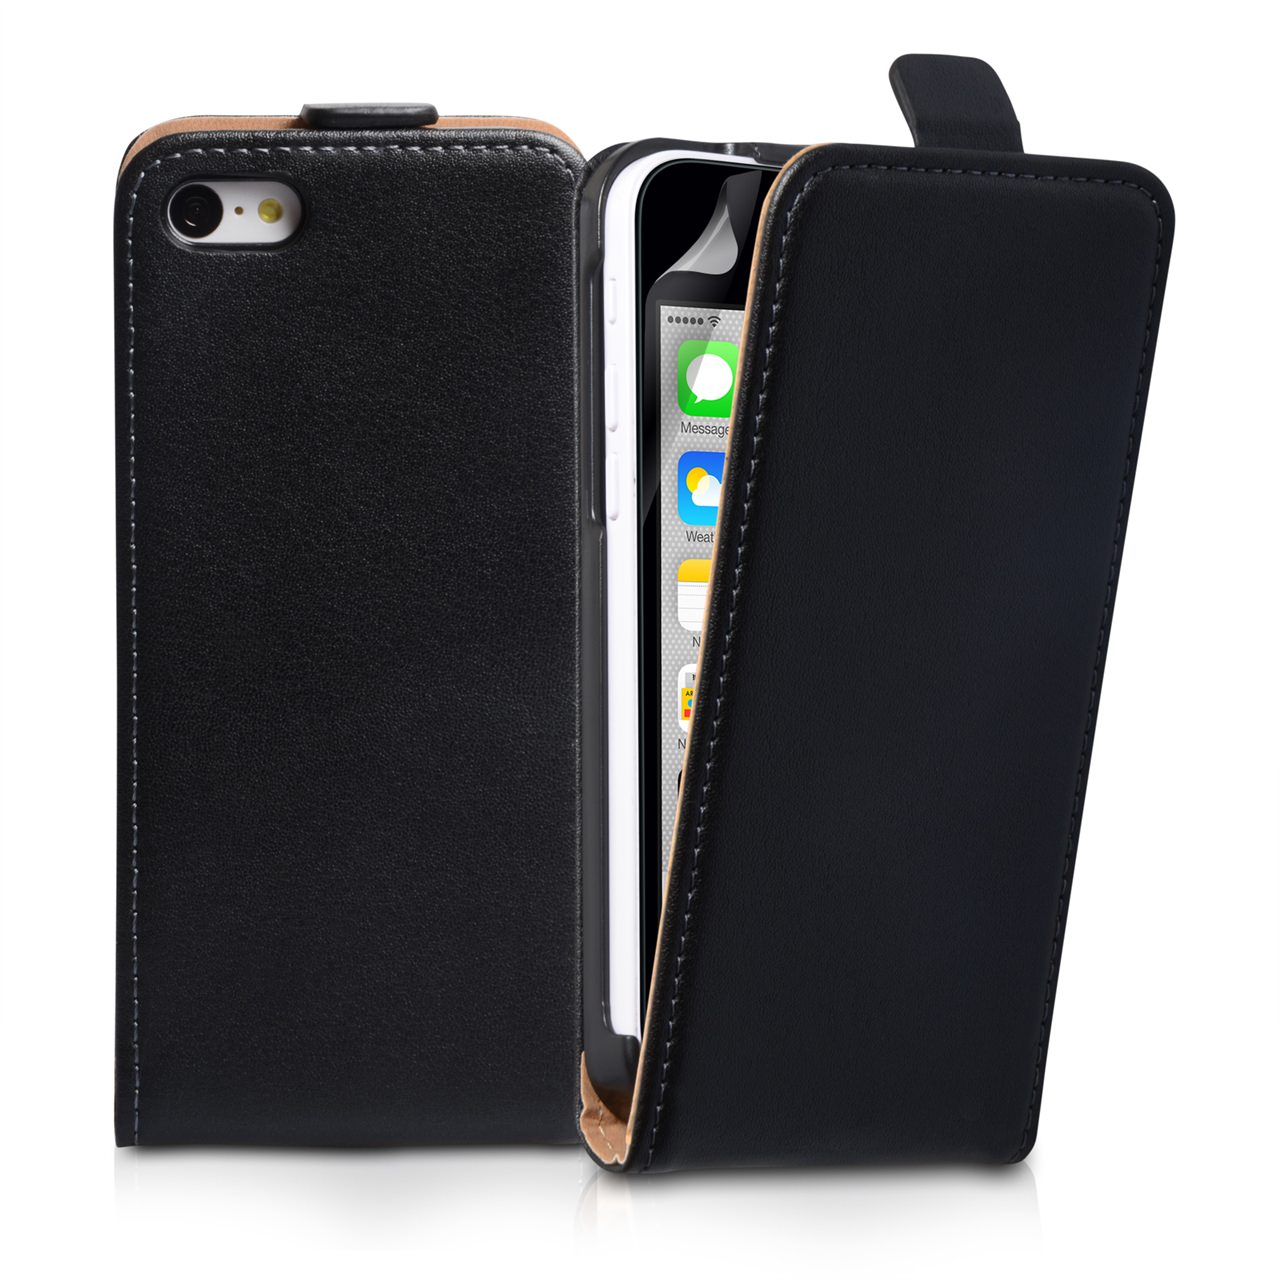 Caseflex iPhone 5C Real Leather Flip Case - Black